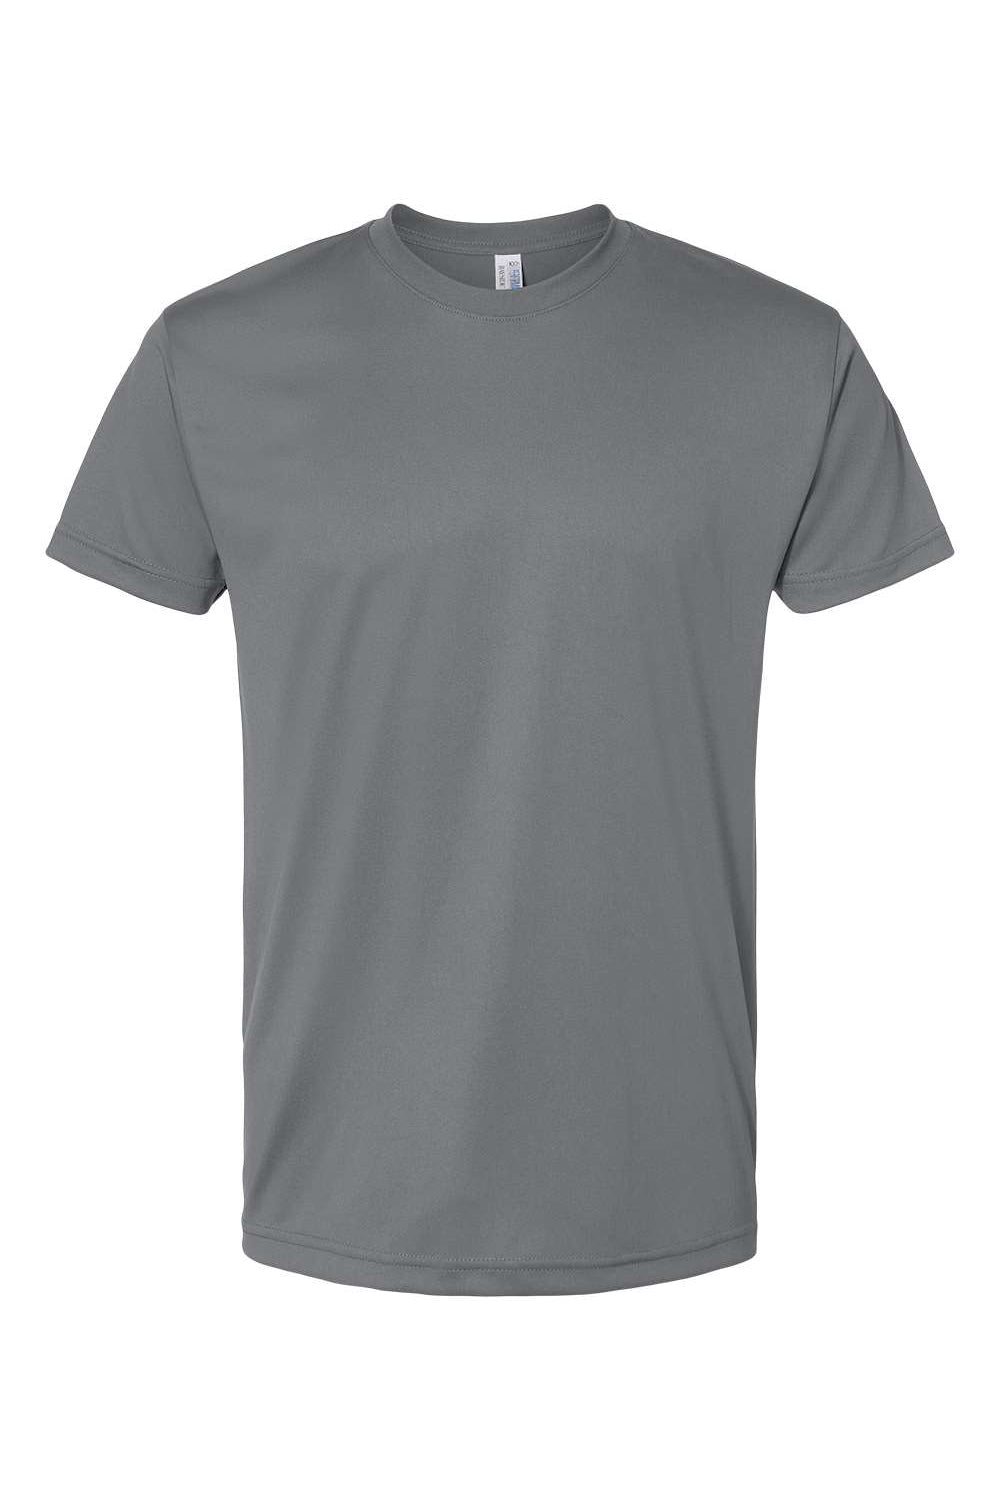 Bayside 5300 Mens USA Made Performance Short Sleeve Crewneck T-Shirt Charcoal Grey Flat Front